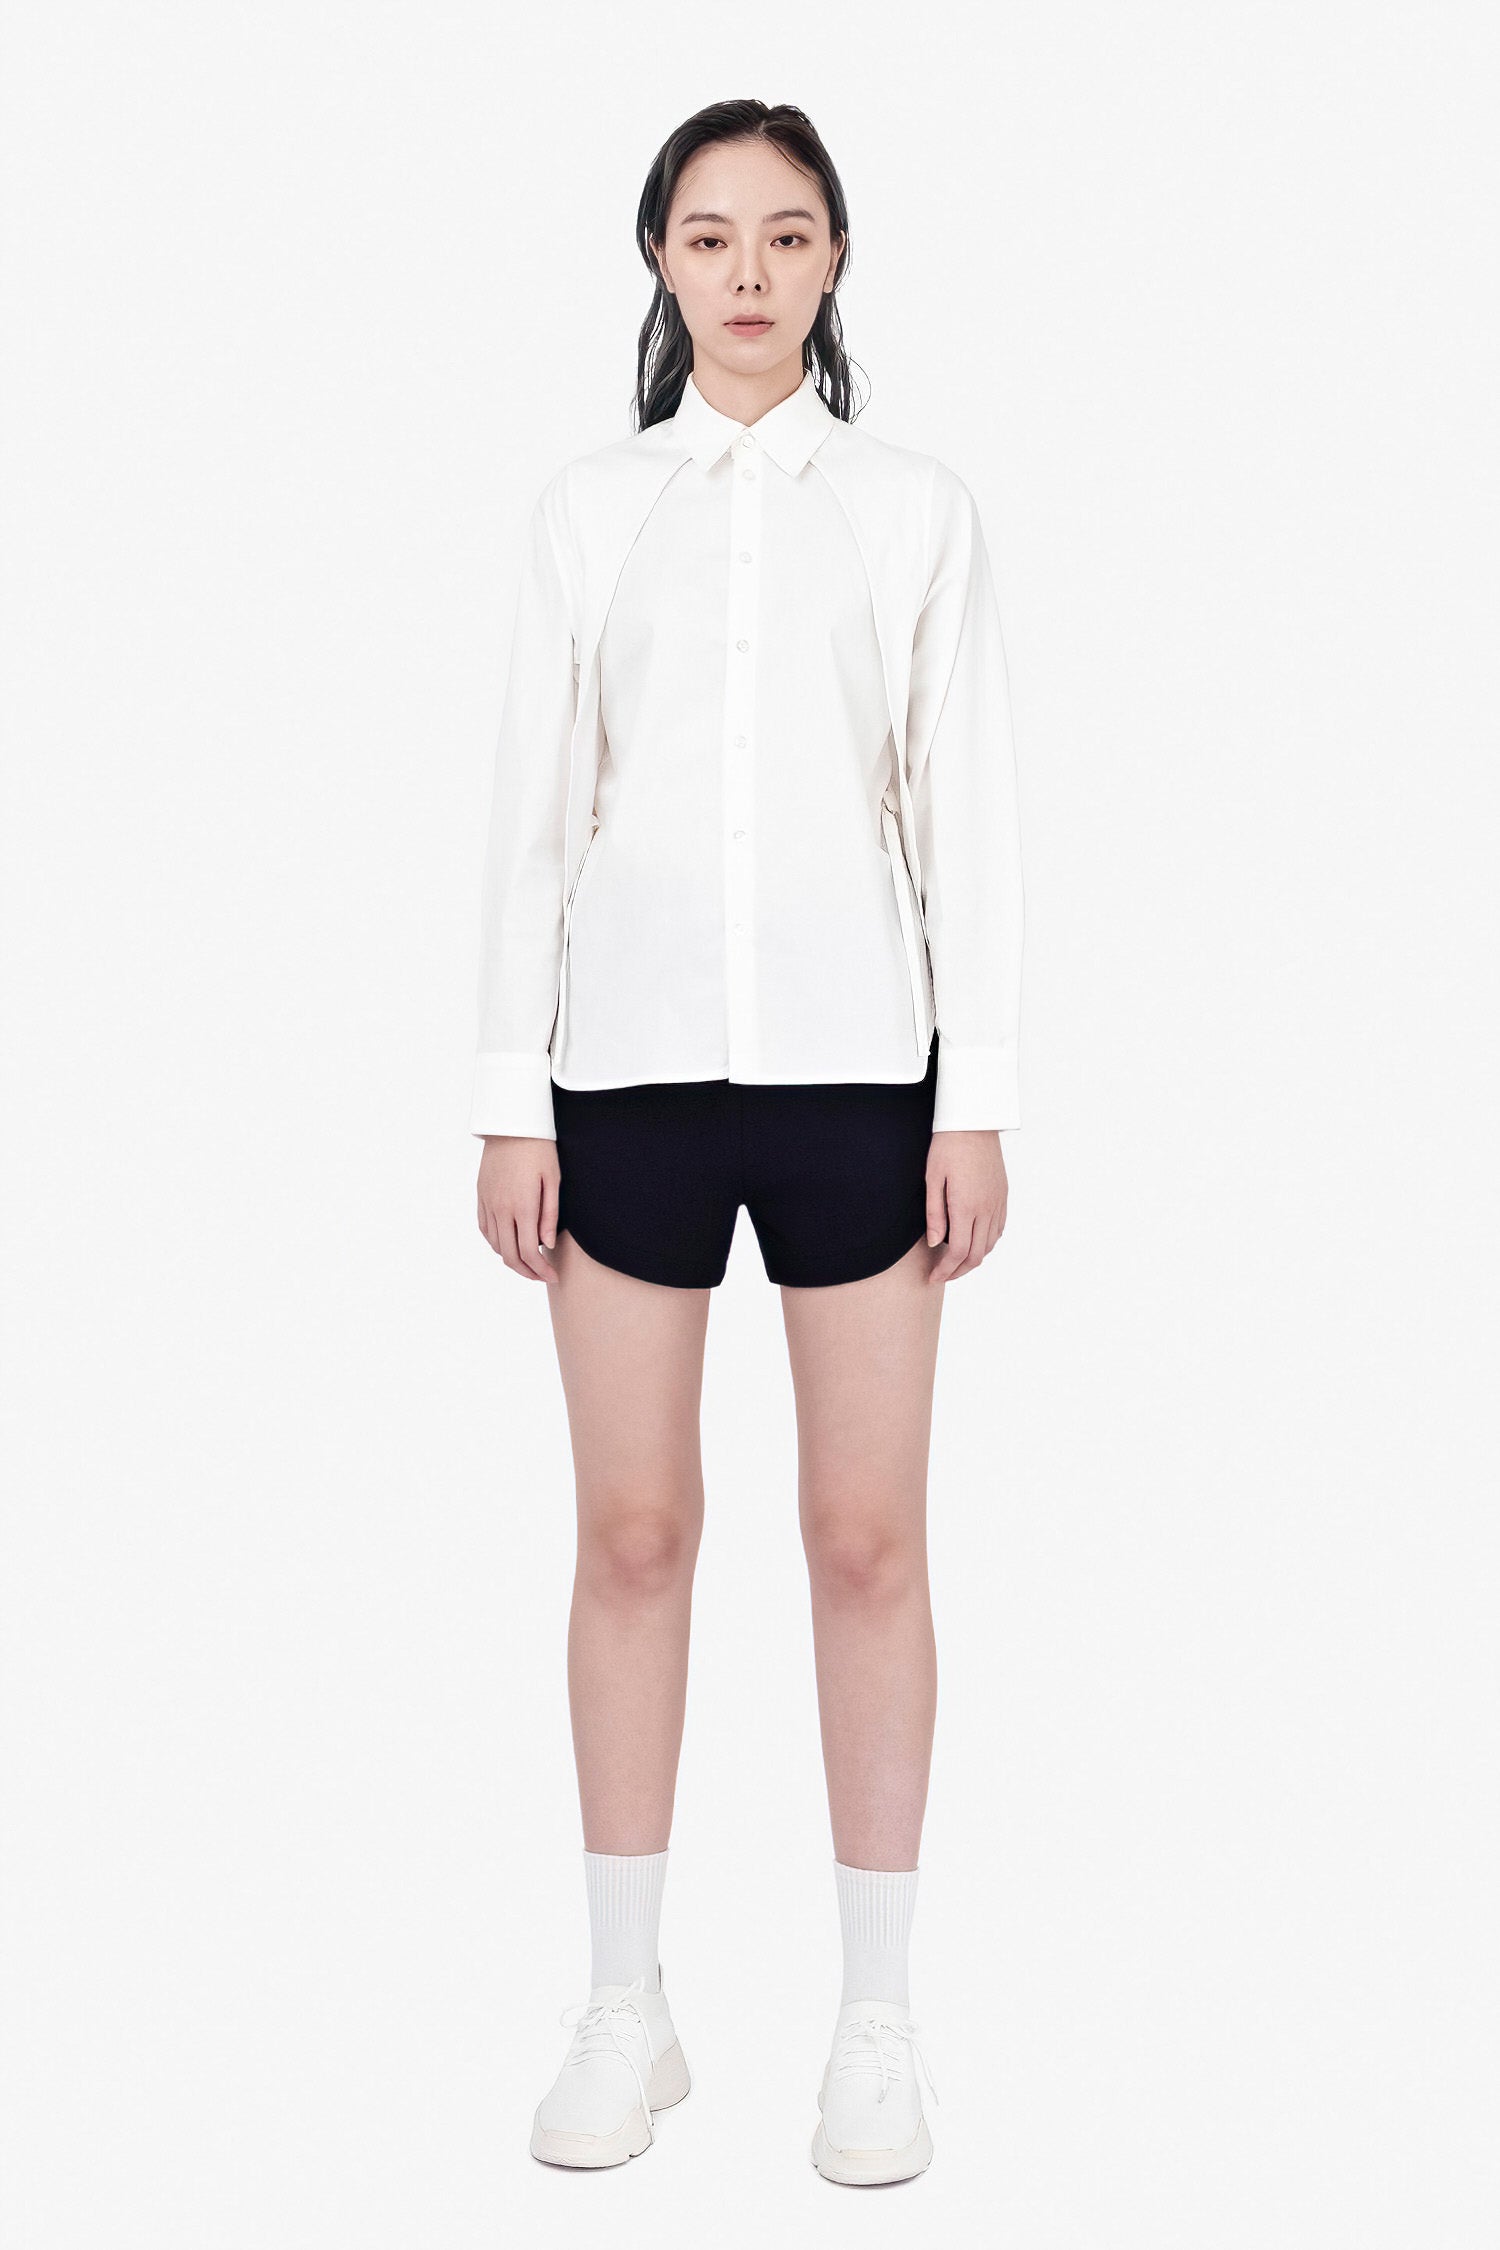 SEANNUNG - WOMEN -  Double Layered Shoulder Detail Shirt 層次披肩襯衫